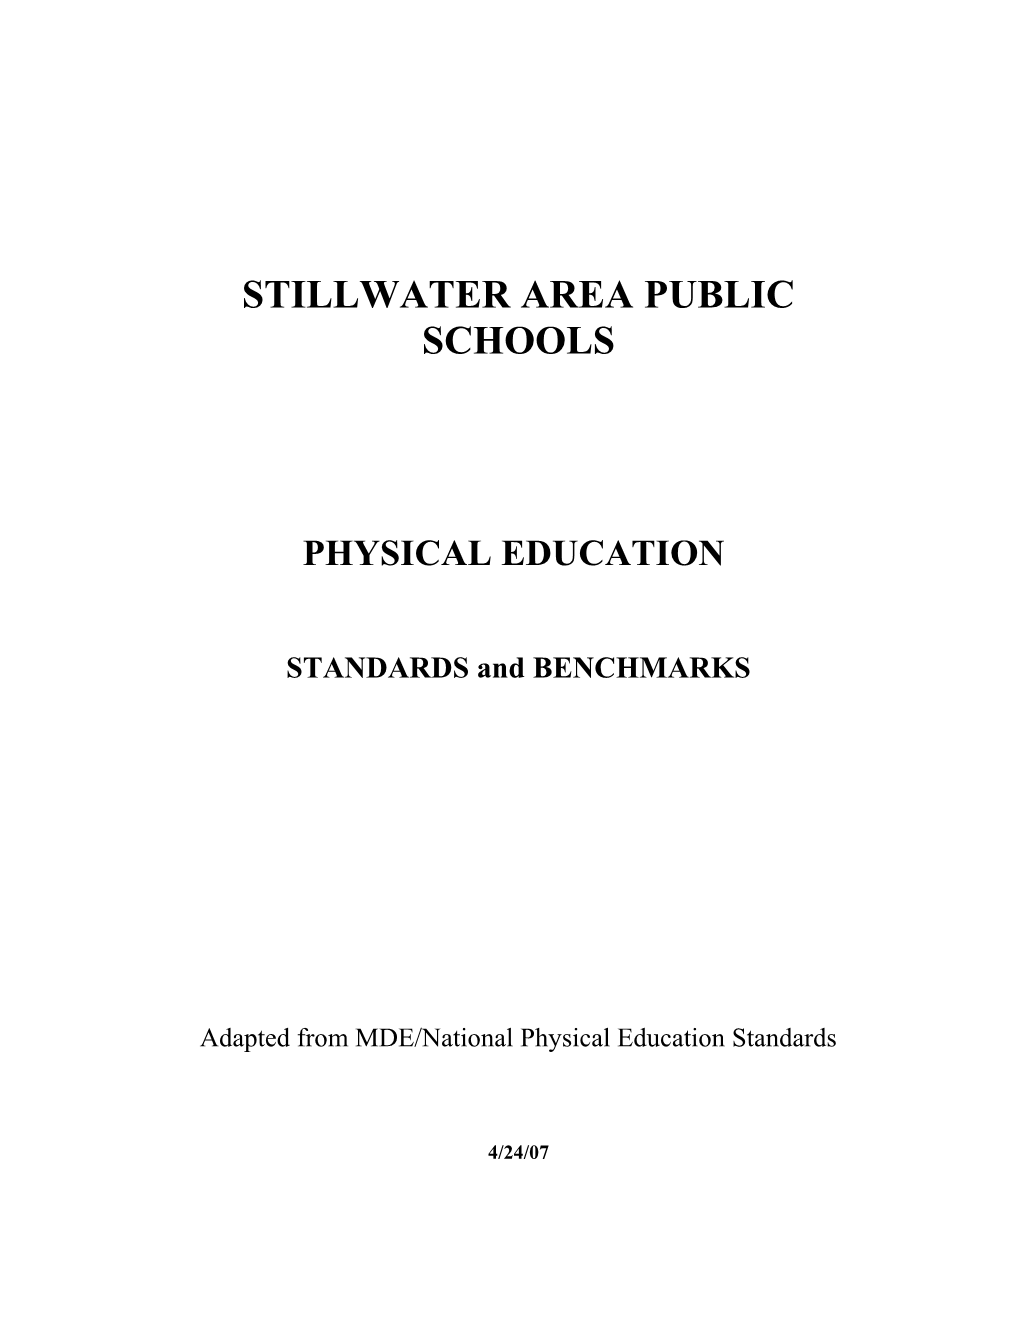 Stillwater Physical Education